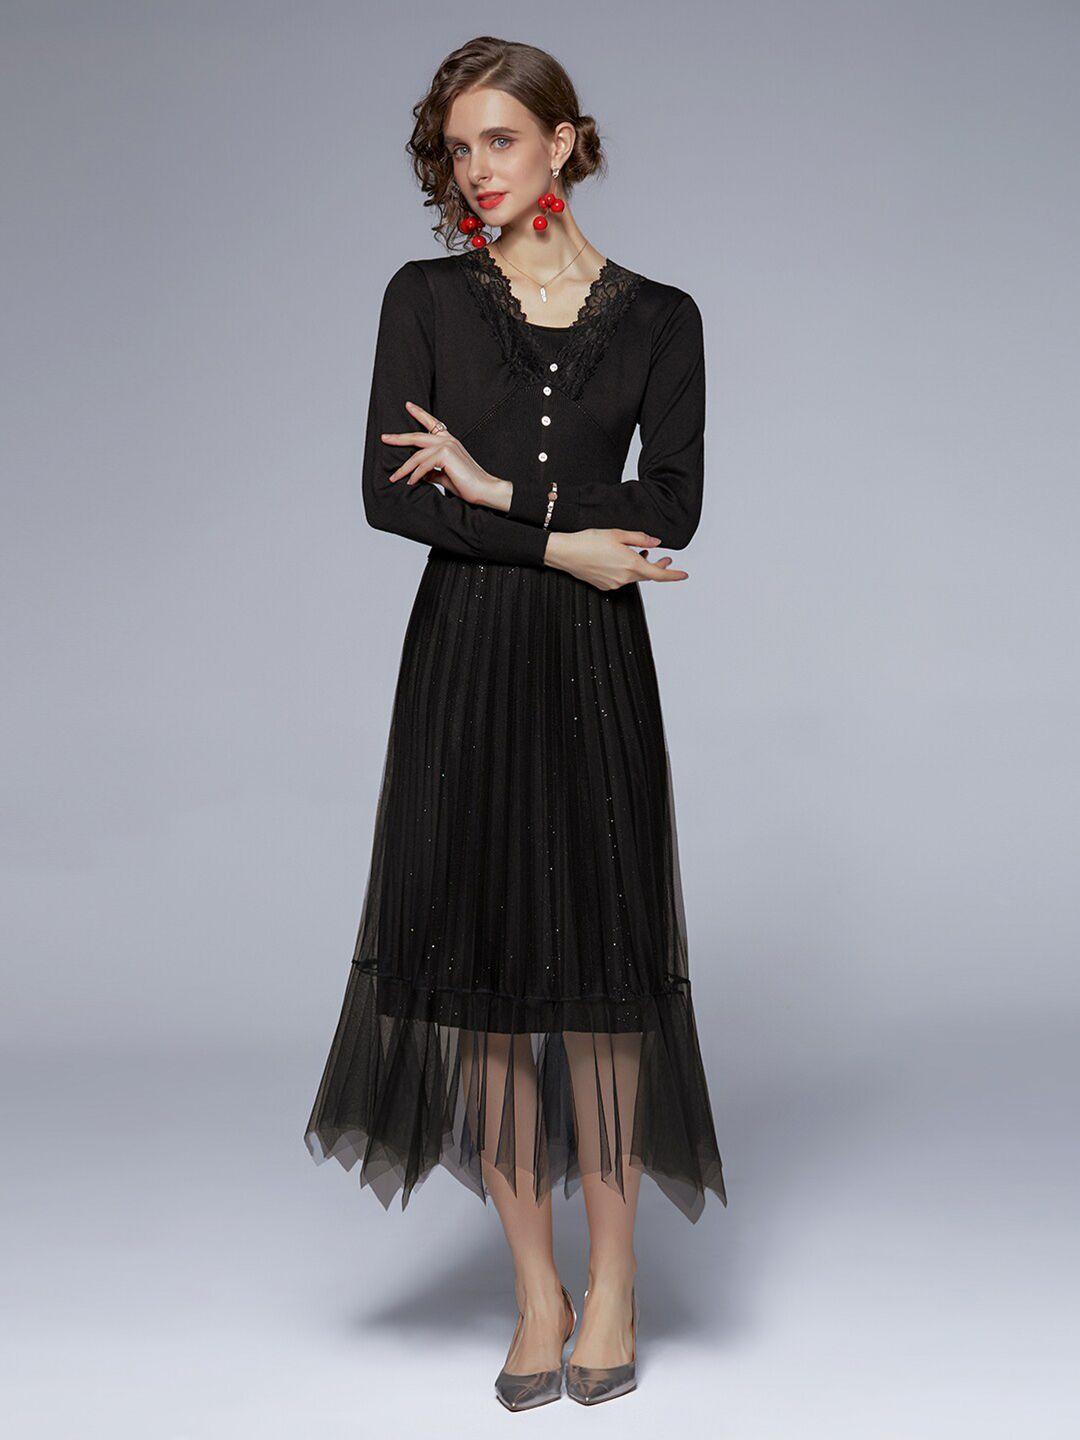 jc collection black embellished net midi dress